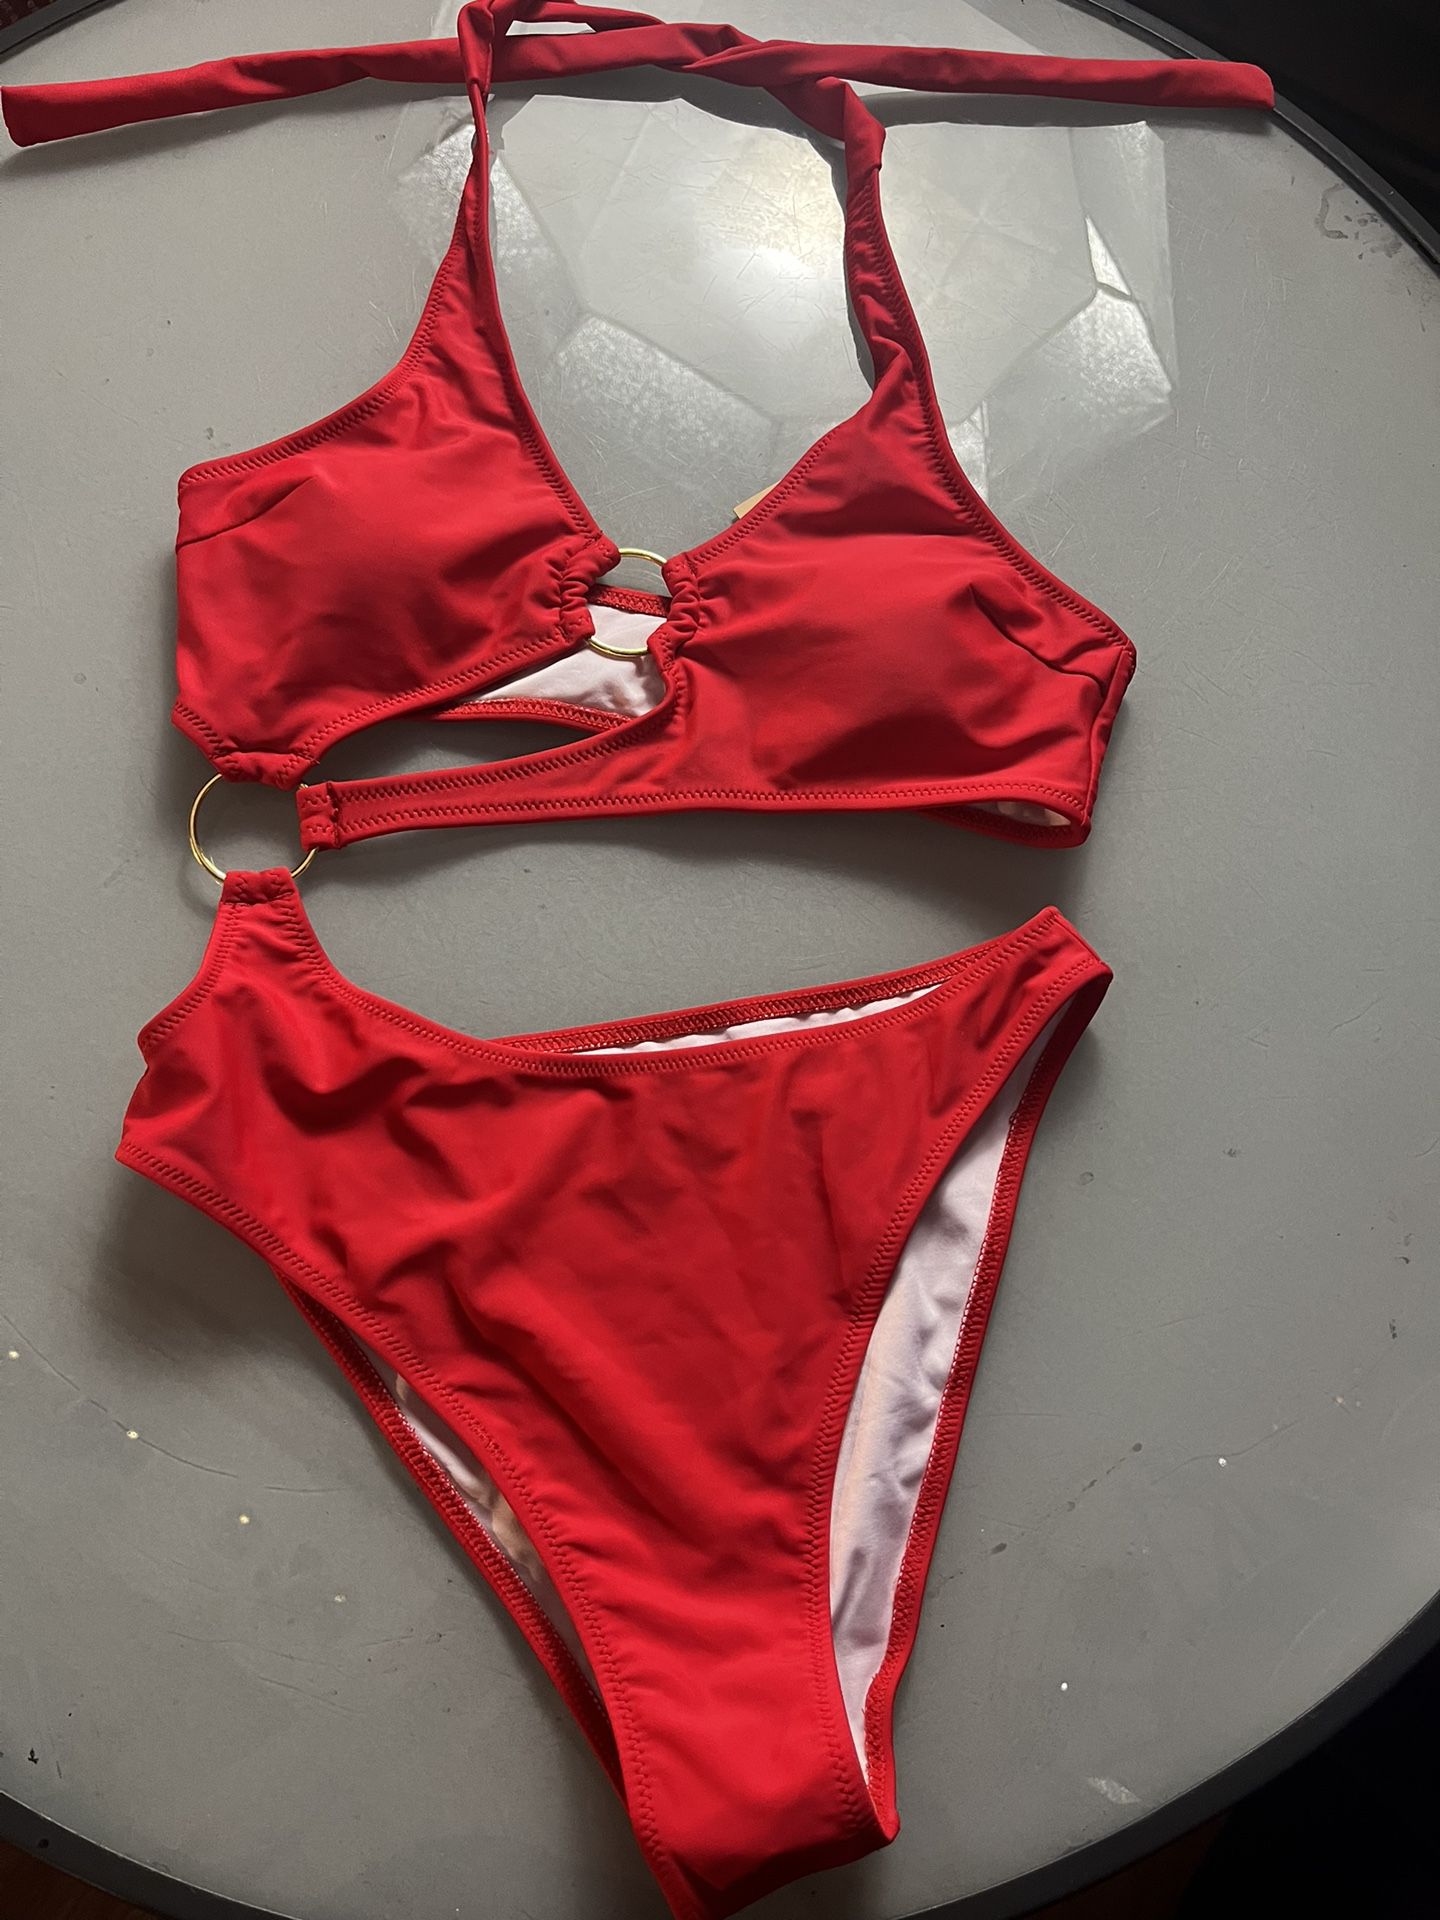 One Pice Bikini Bathing Suit Brand New !!